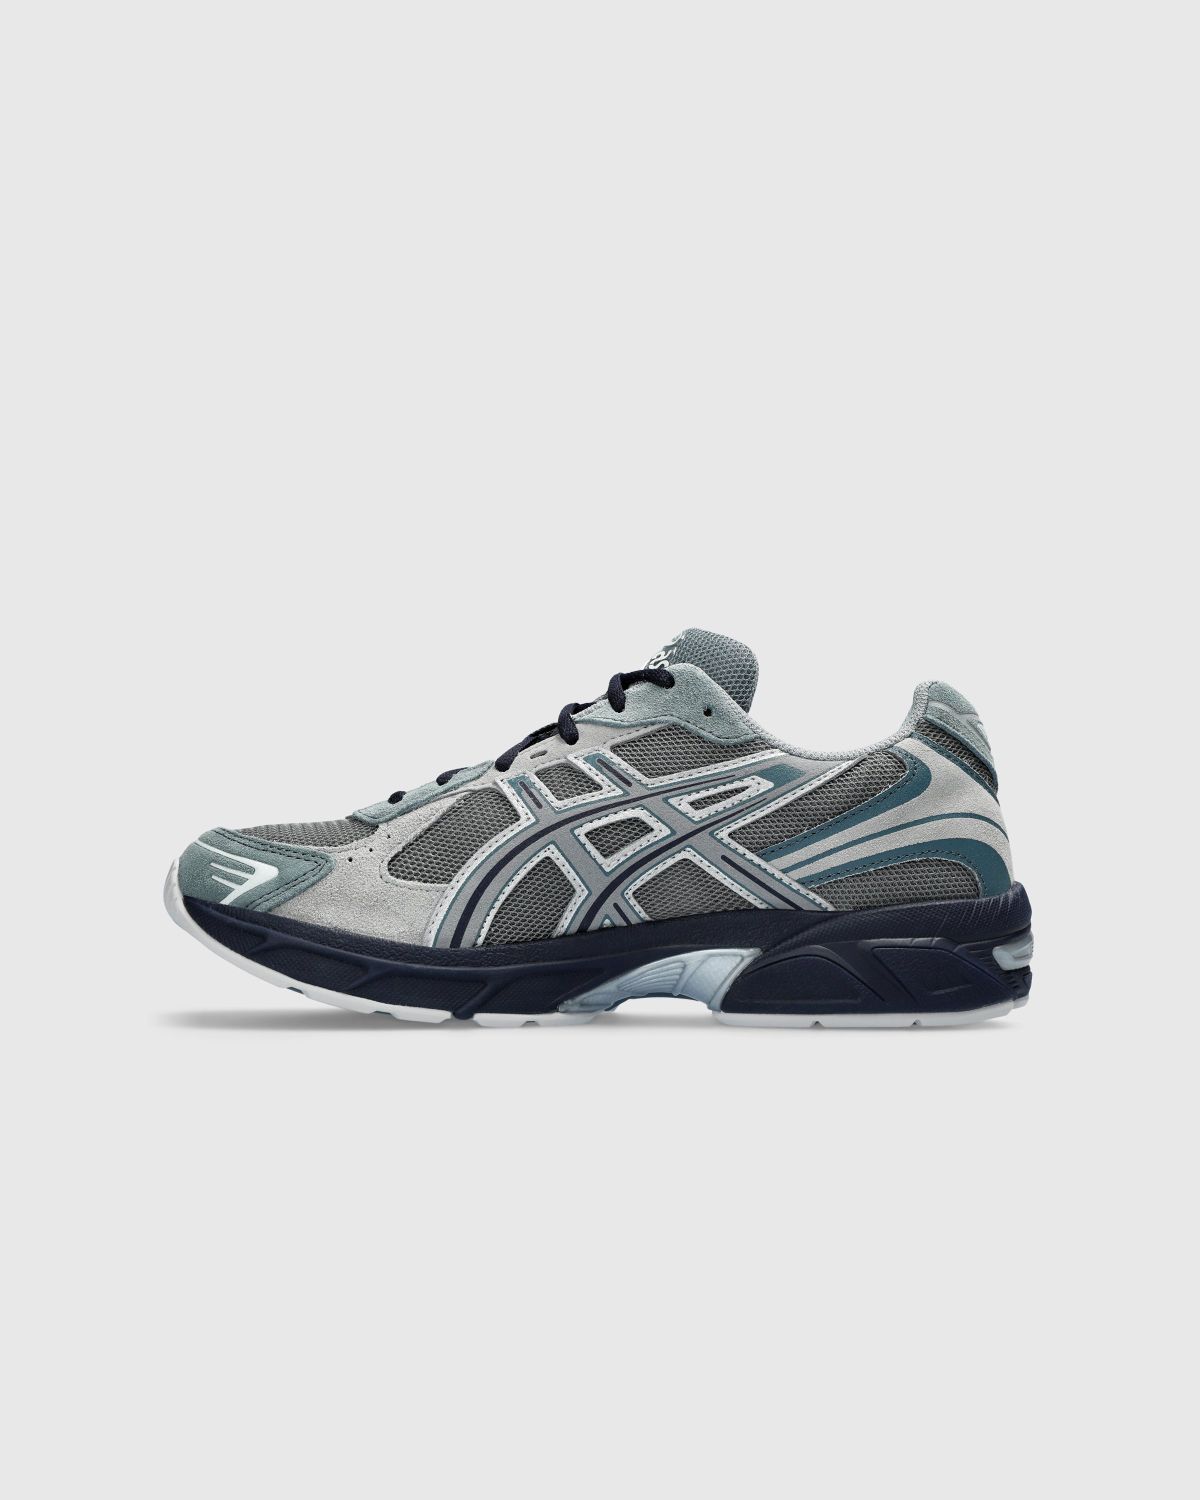 asics – GEL-1130 Steel Gray/Sheet Rock - Sneakers - Grey - Image 2